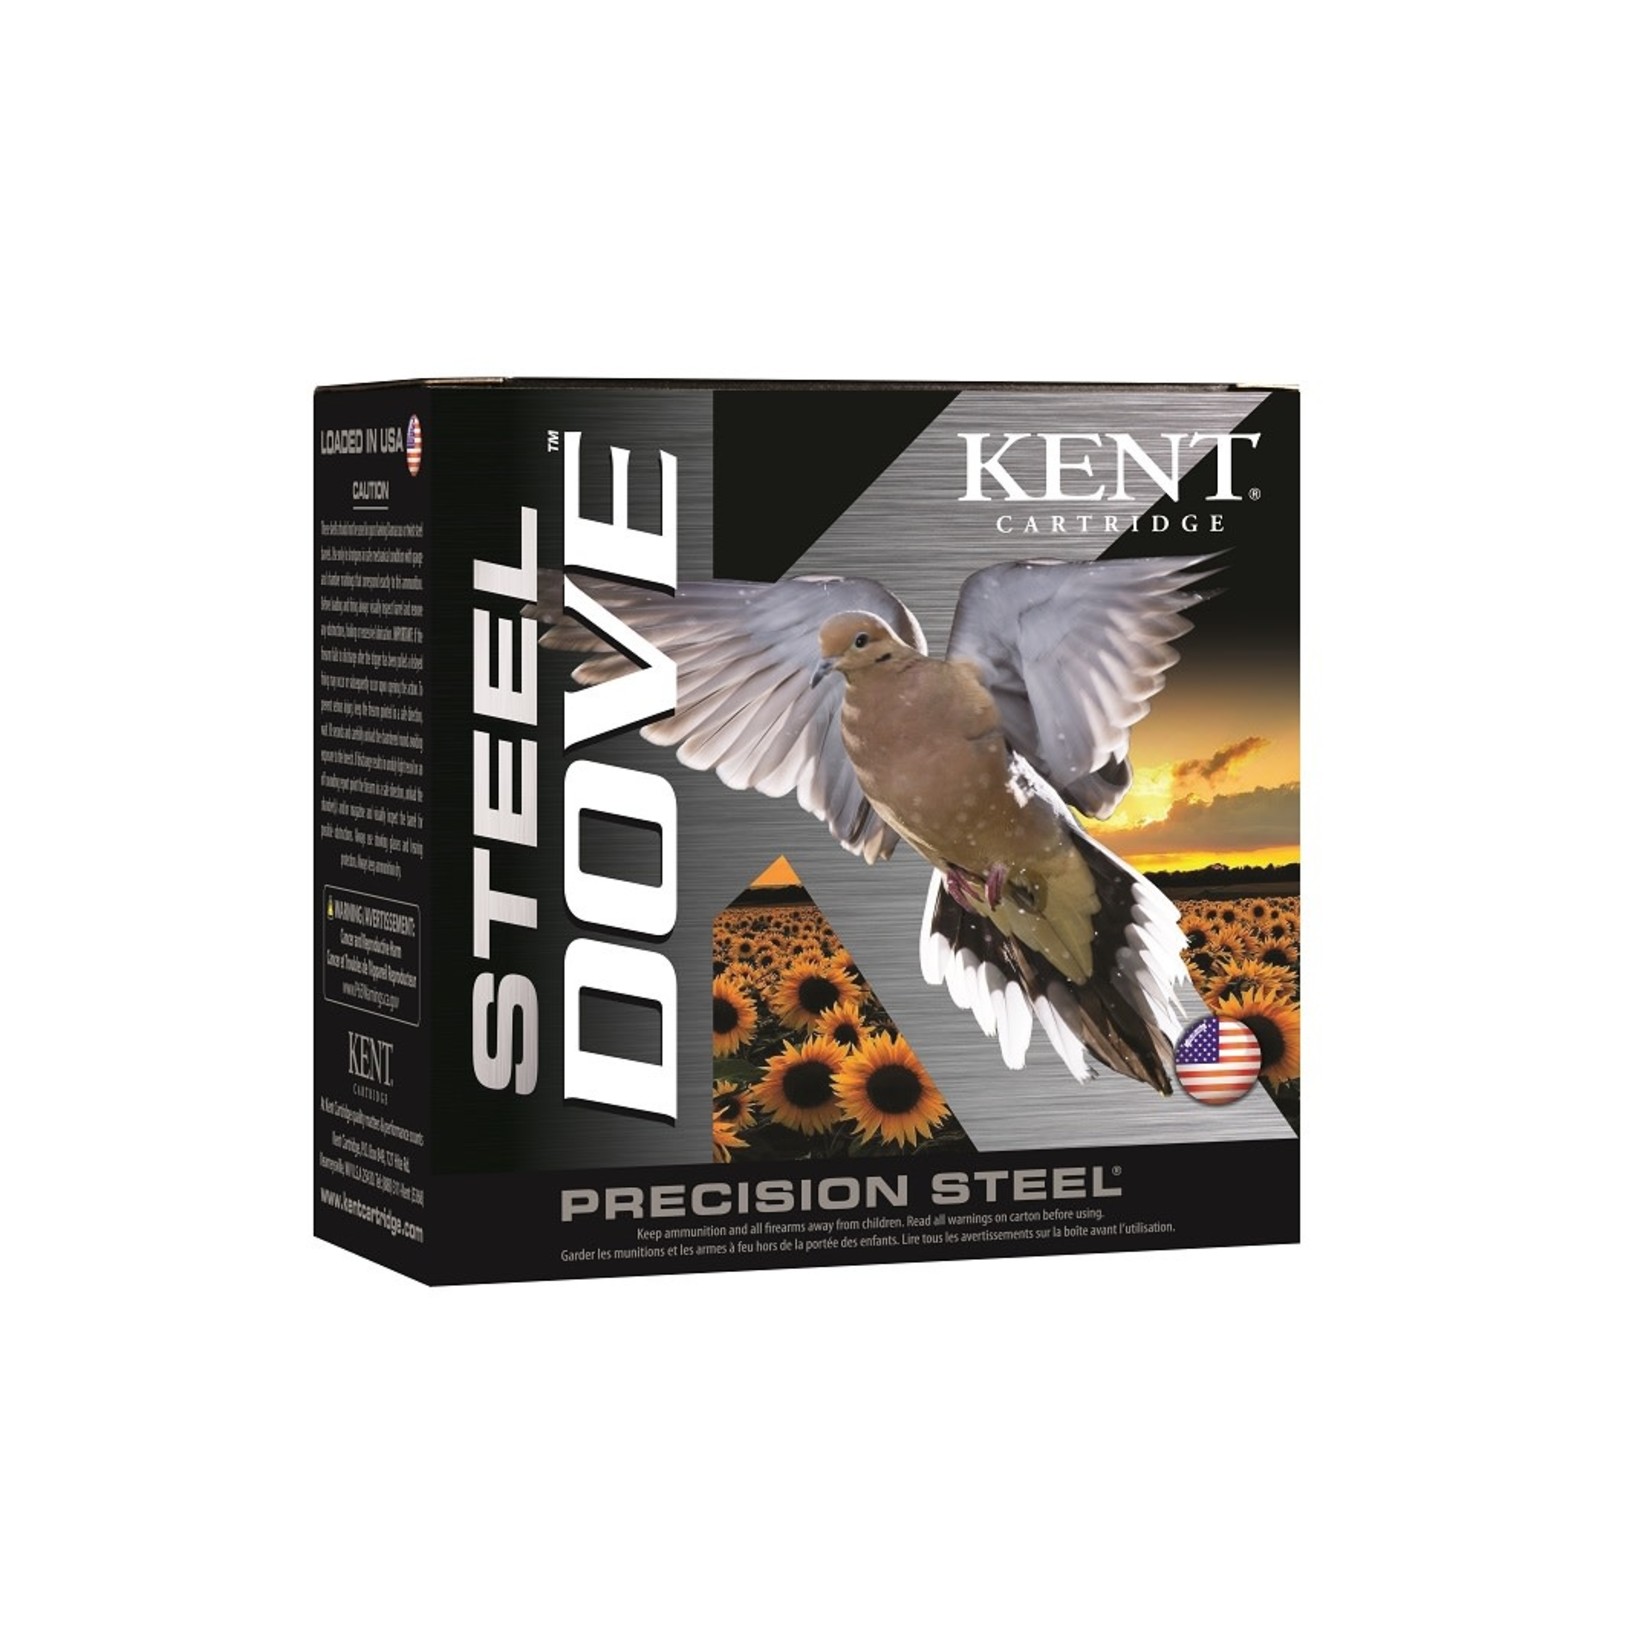 Kent Cartridge KENT 12 GA Steel Dove 2.75" #6 1oz